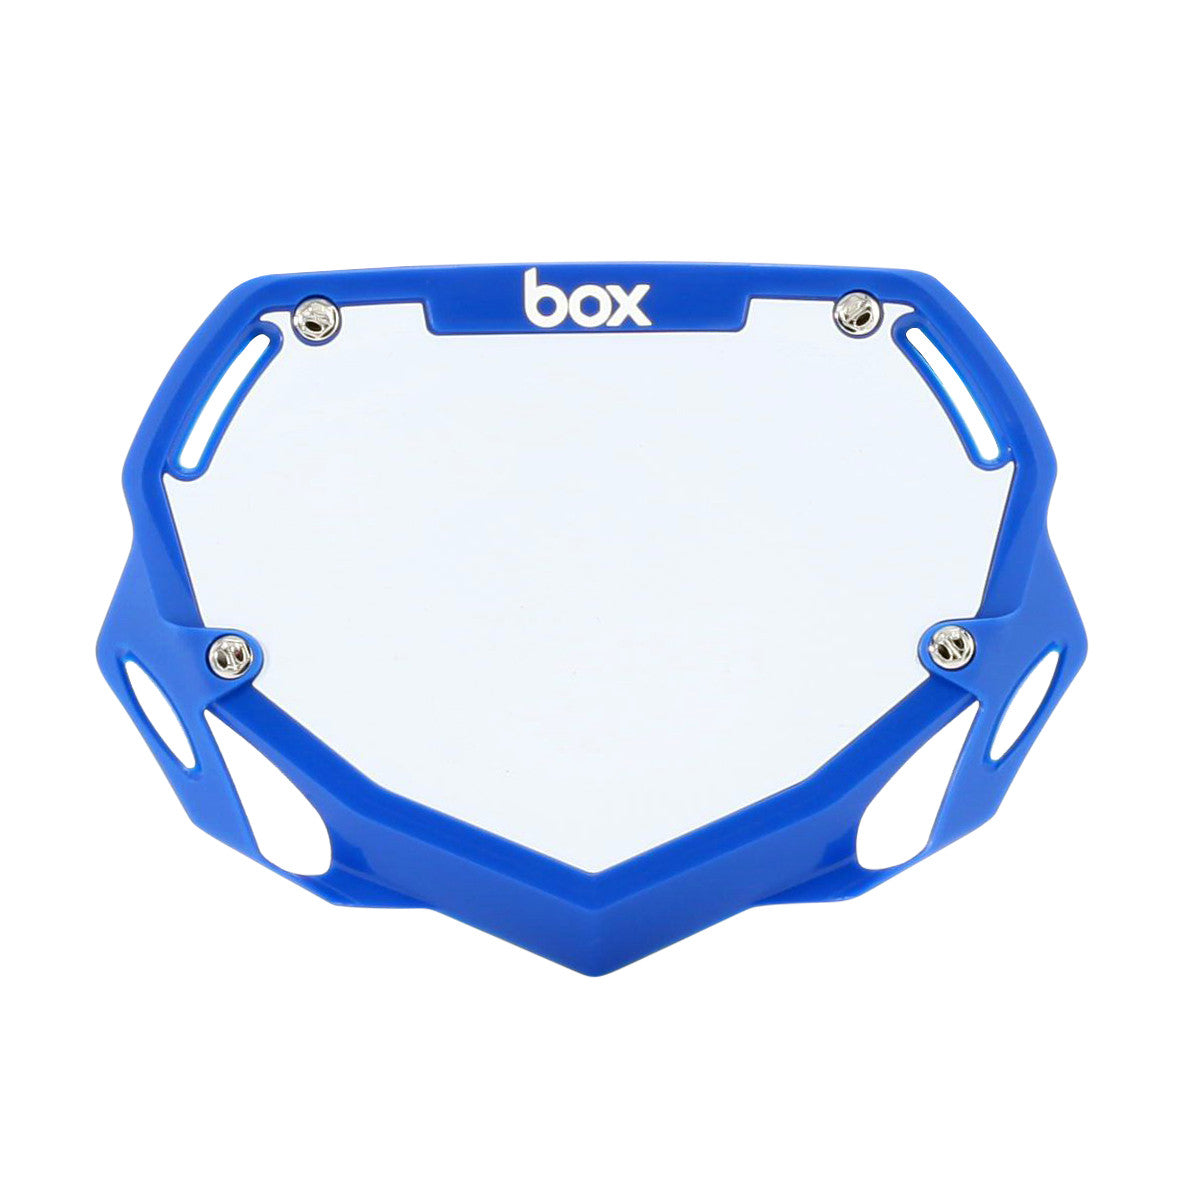 Box Two Mini / Cruiser BMX Number Plate - Blue + White